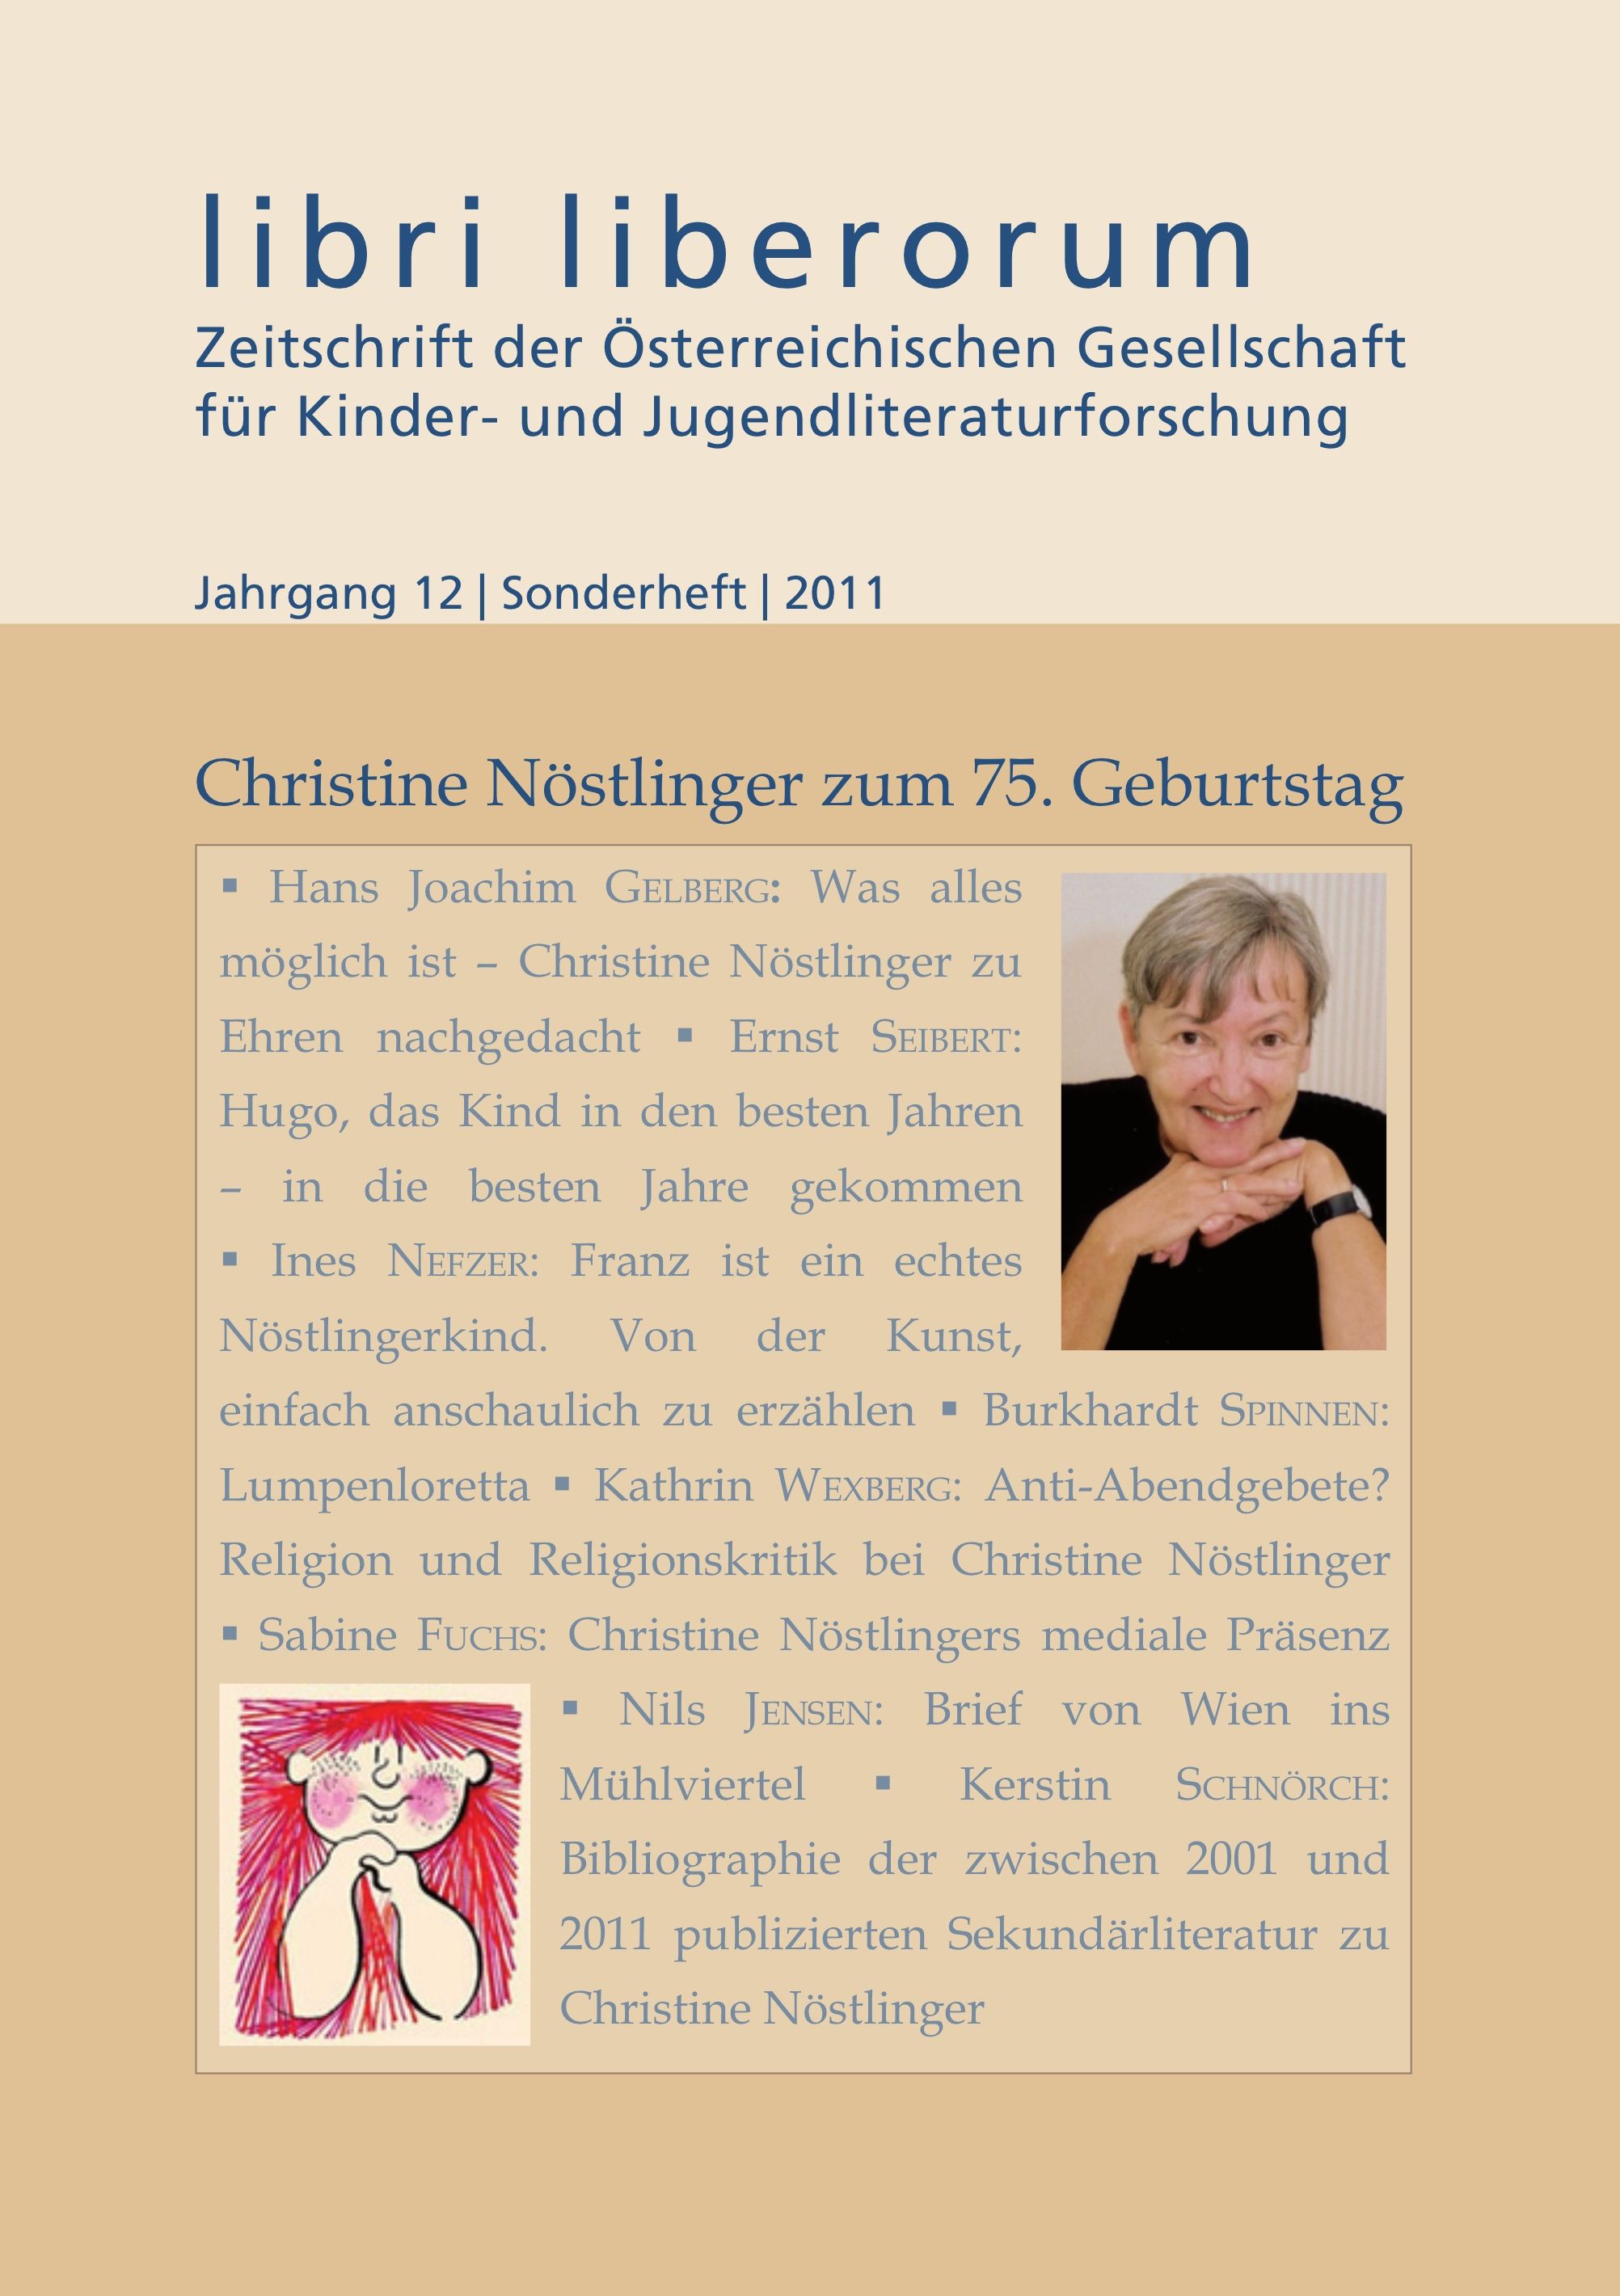 					Ansehen libri liberorum (Jahrgang 12/Sonderheft/2011)
				